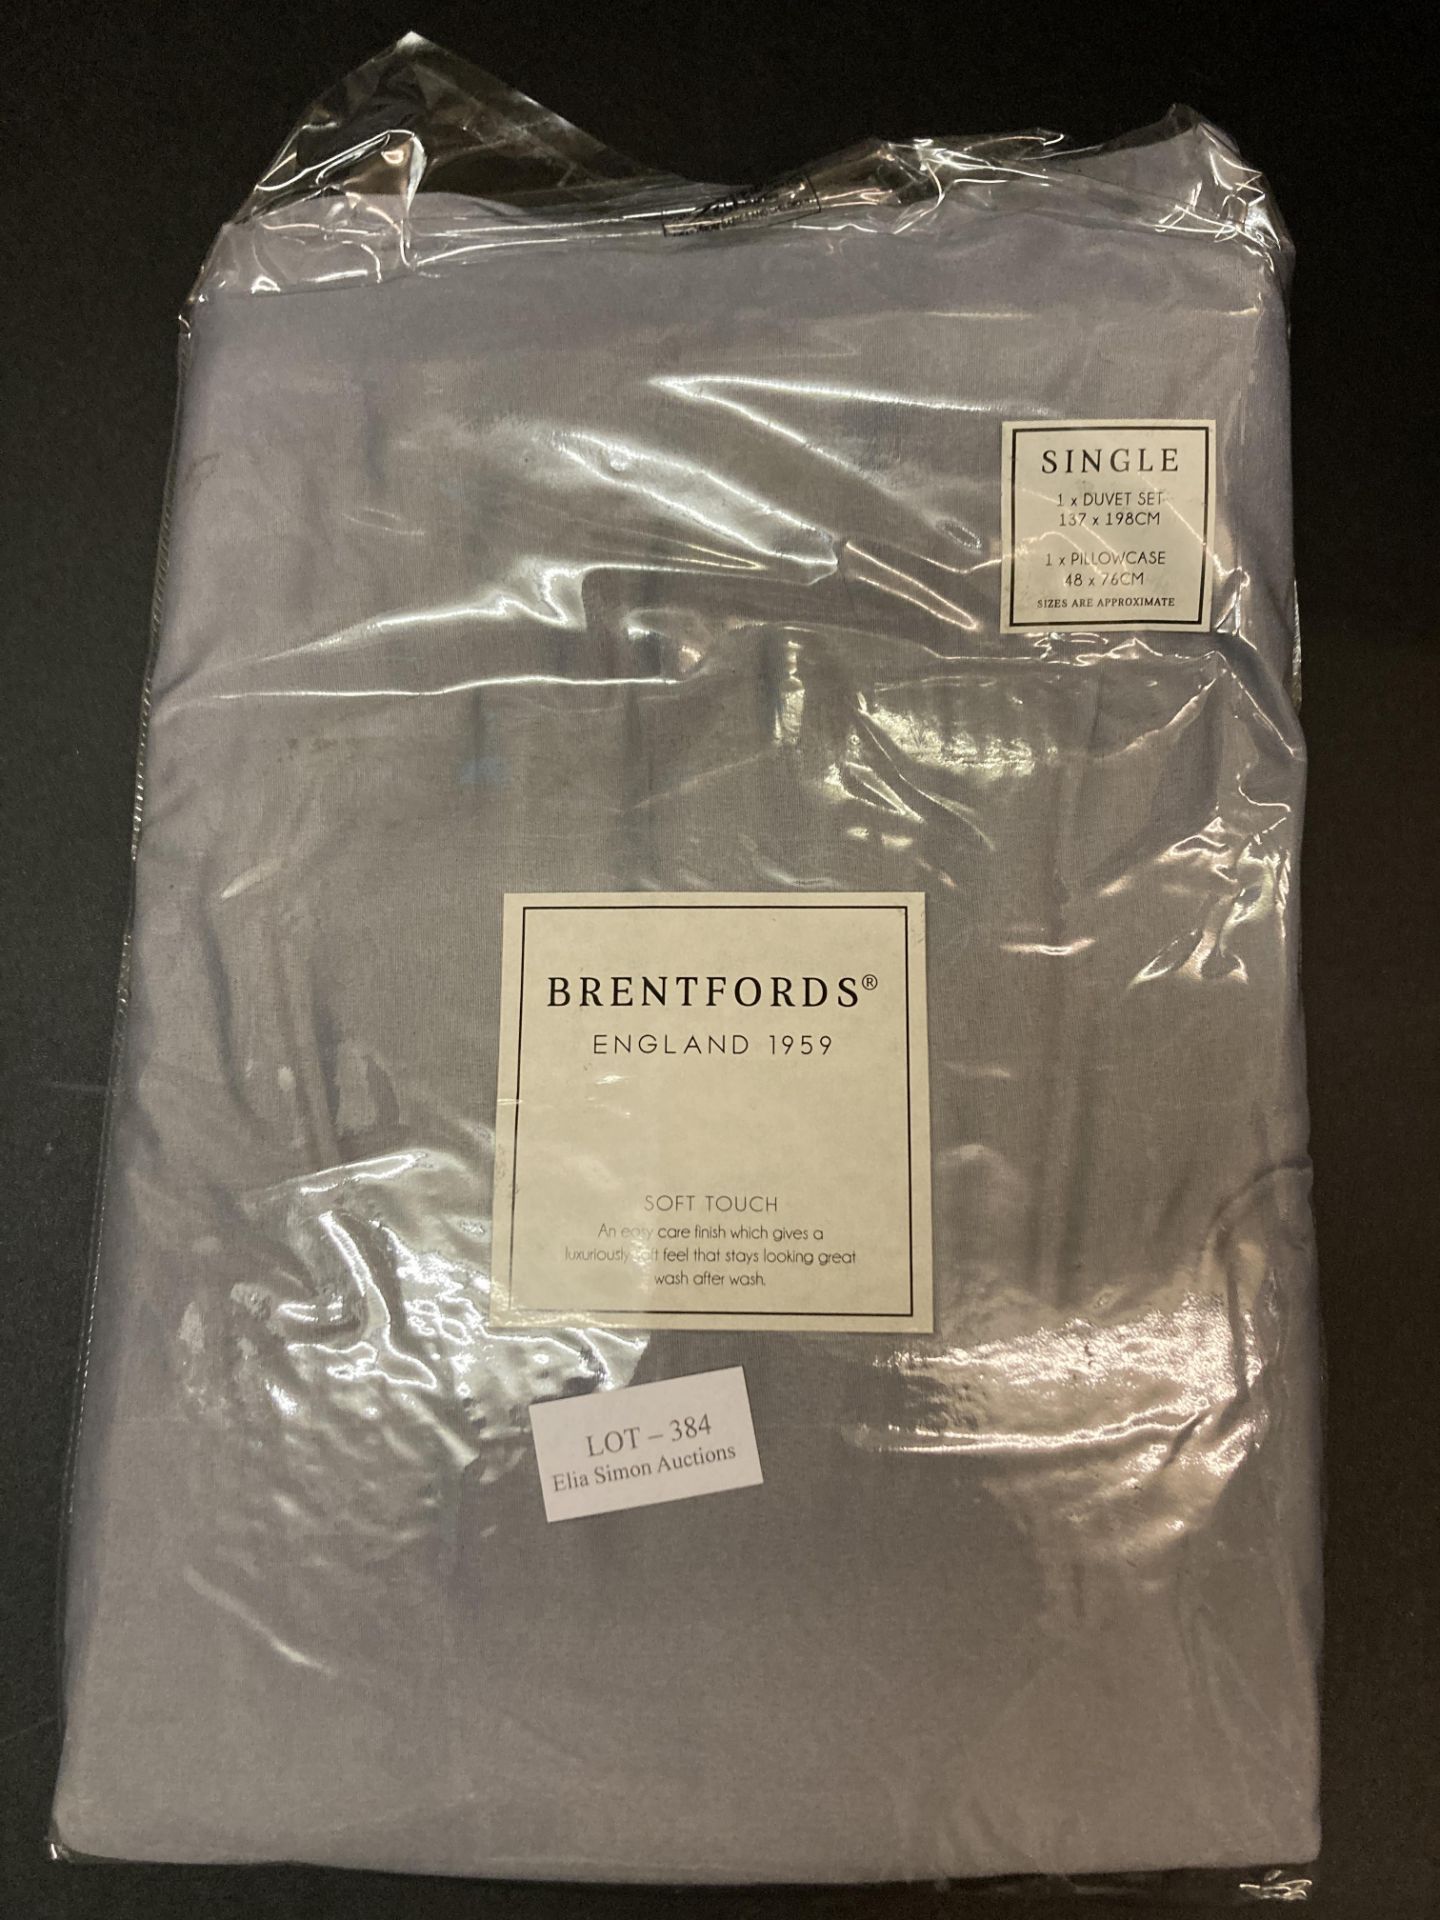 Brentfords Plain Dye Duvet Quilt Cover with Pillow Case Bedding Set - Grey, Single - Image 2 of 2